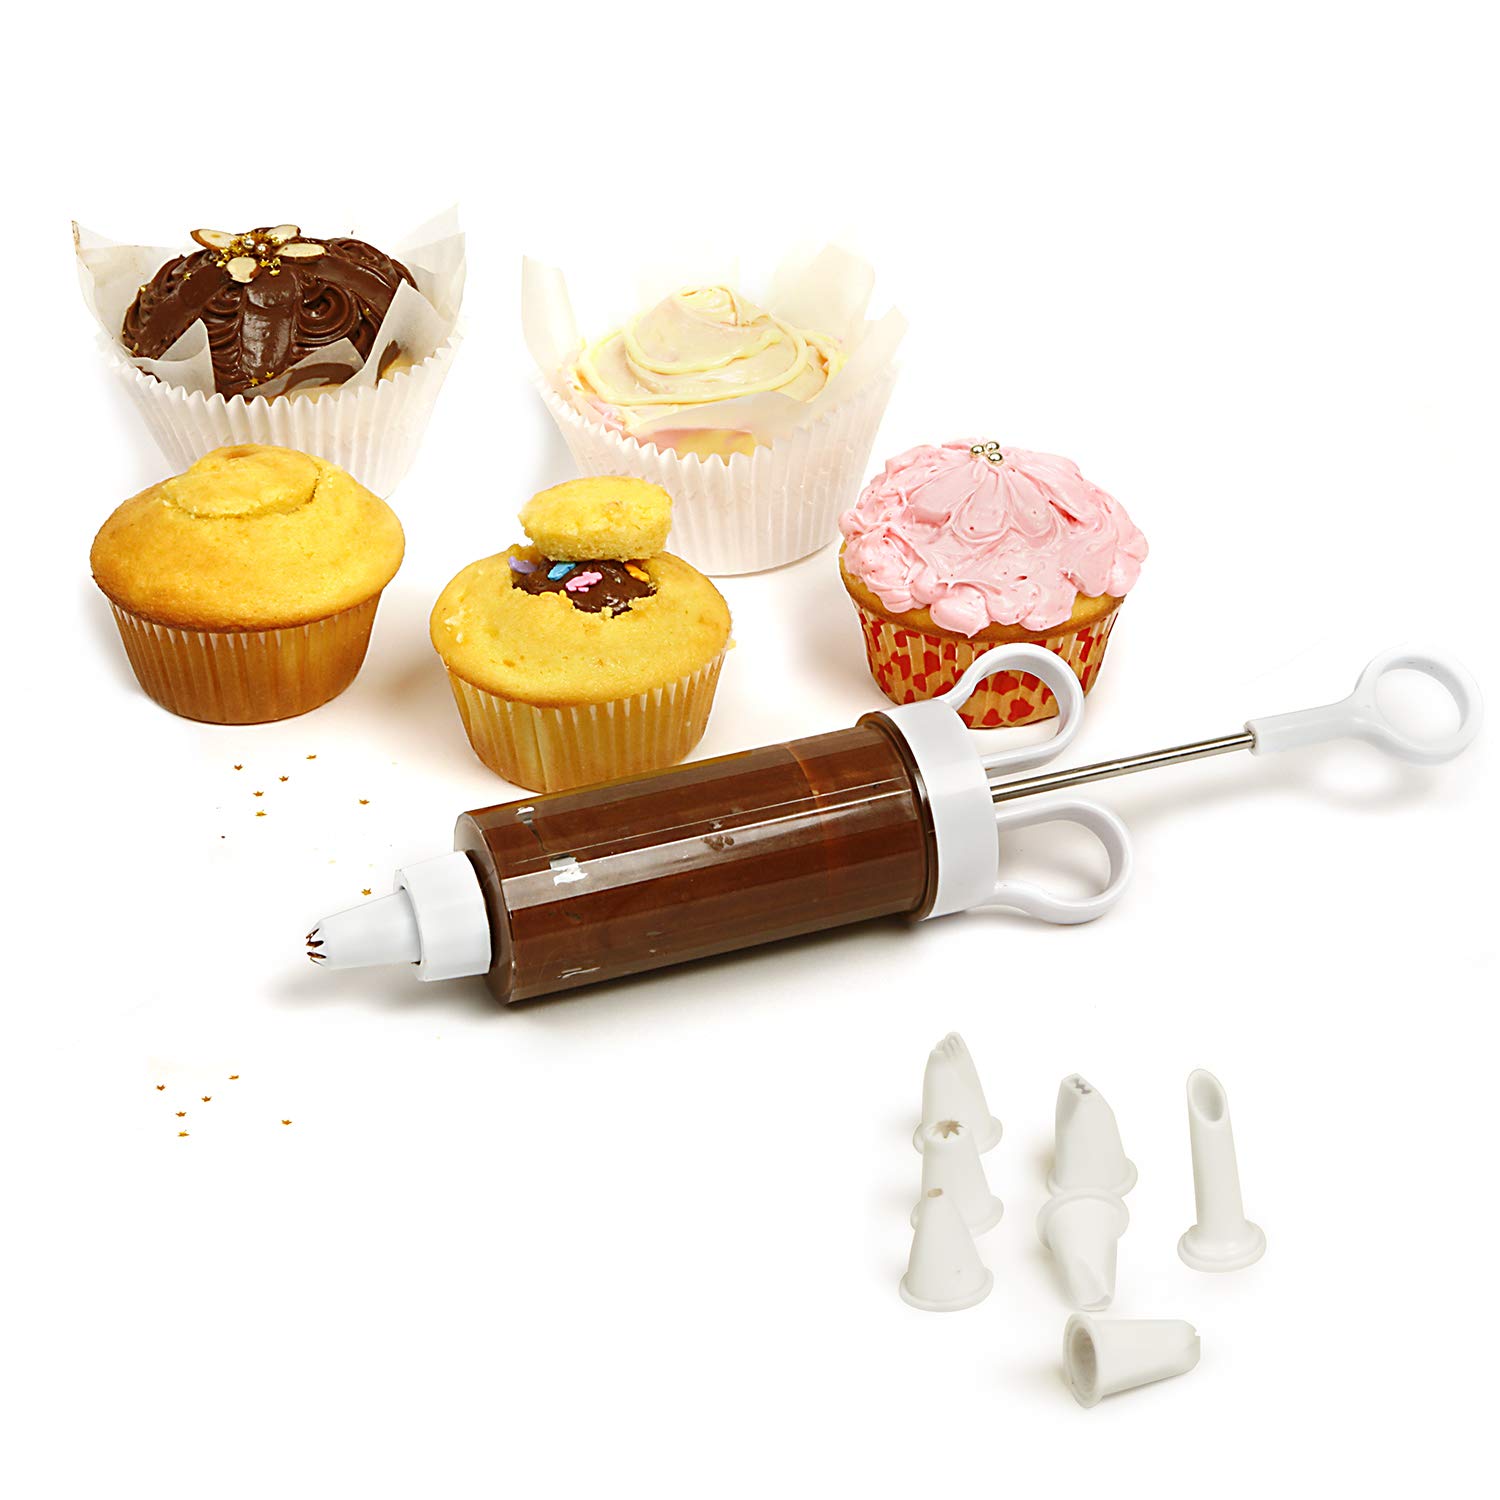 Norpro Cupcake Injector/Decorating Icing Set, 9-Piece Set